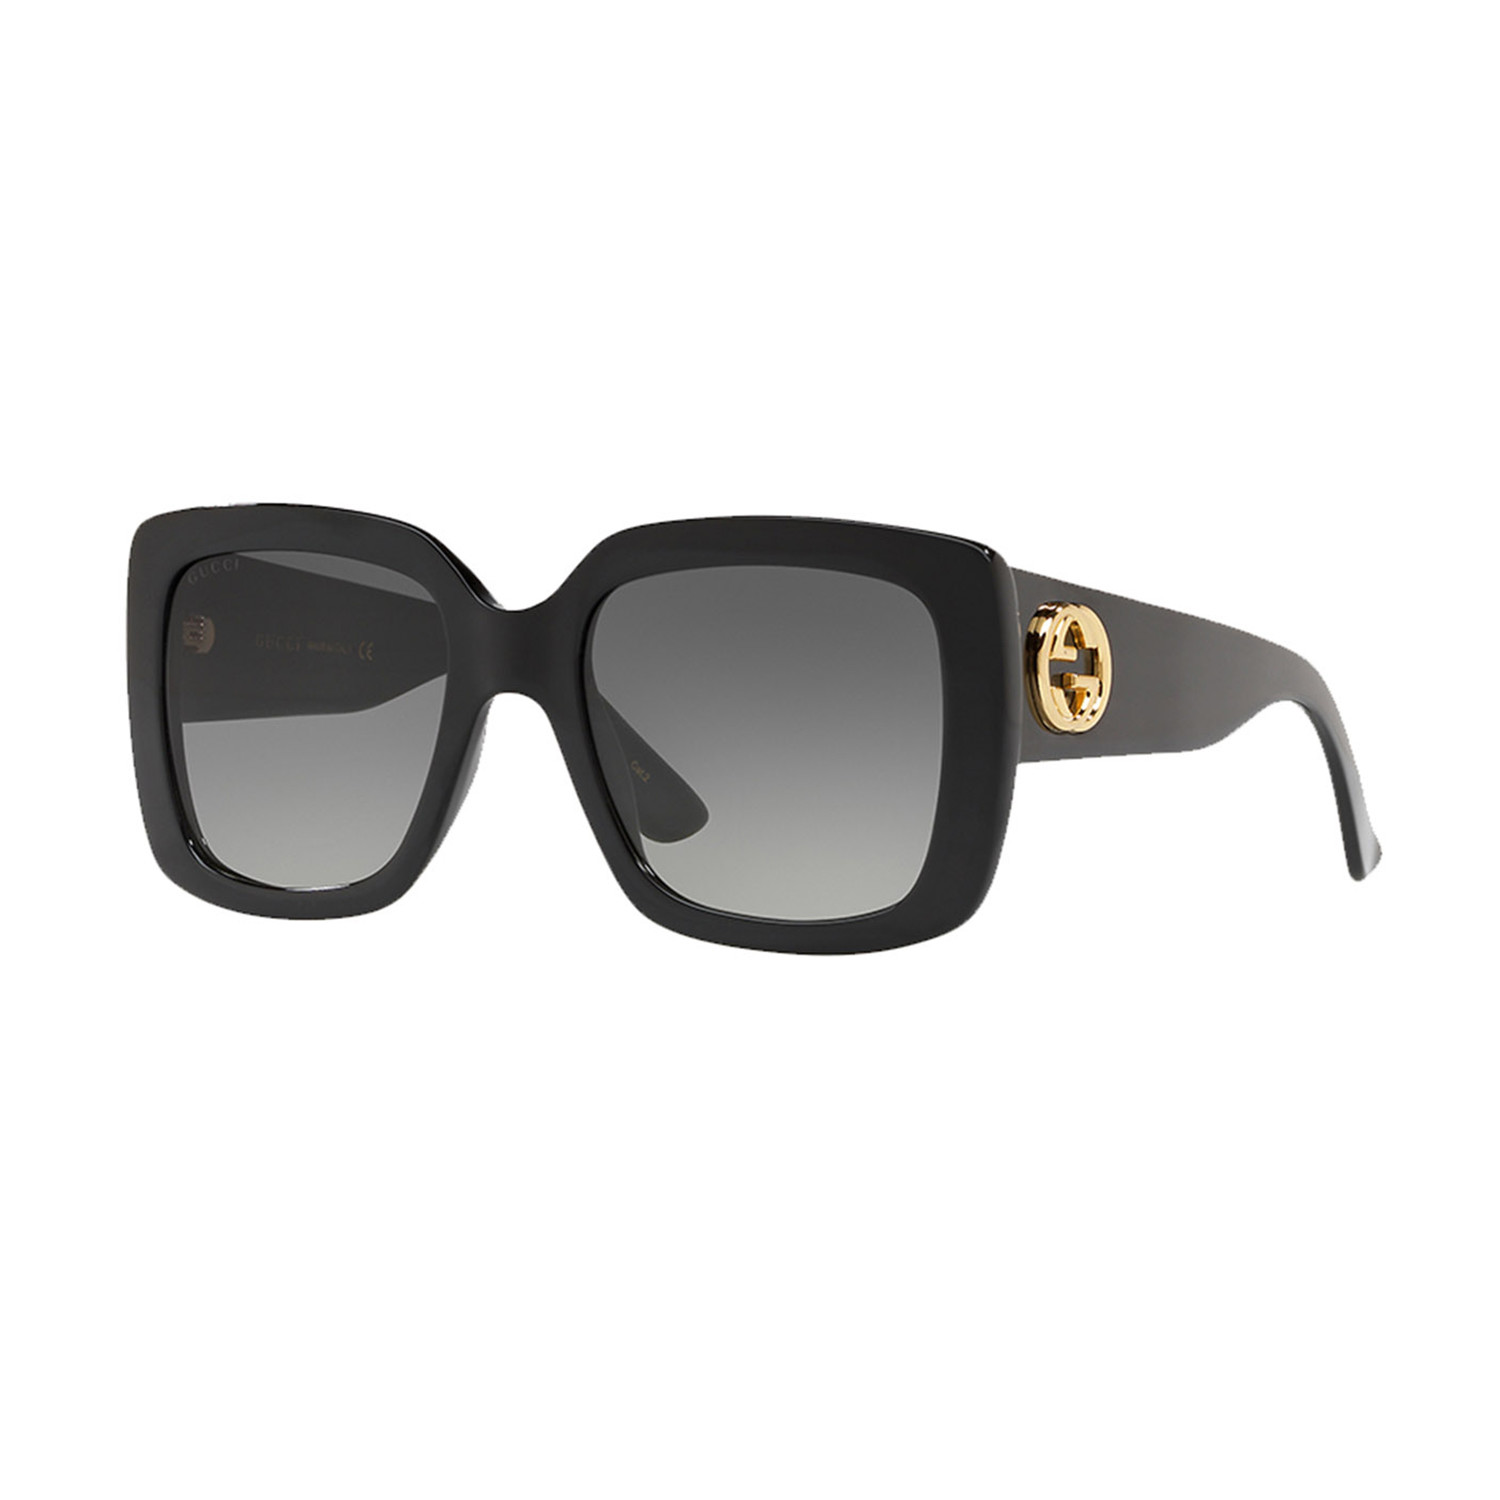 Women S Gg Square Sunglasses Black Gucci Touch Of Modern